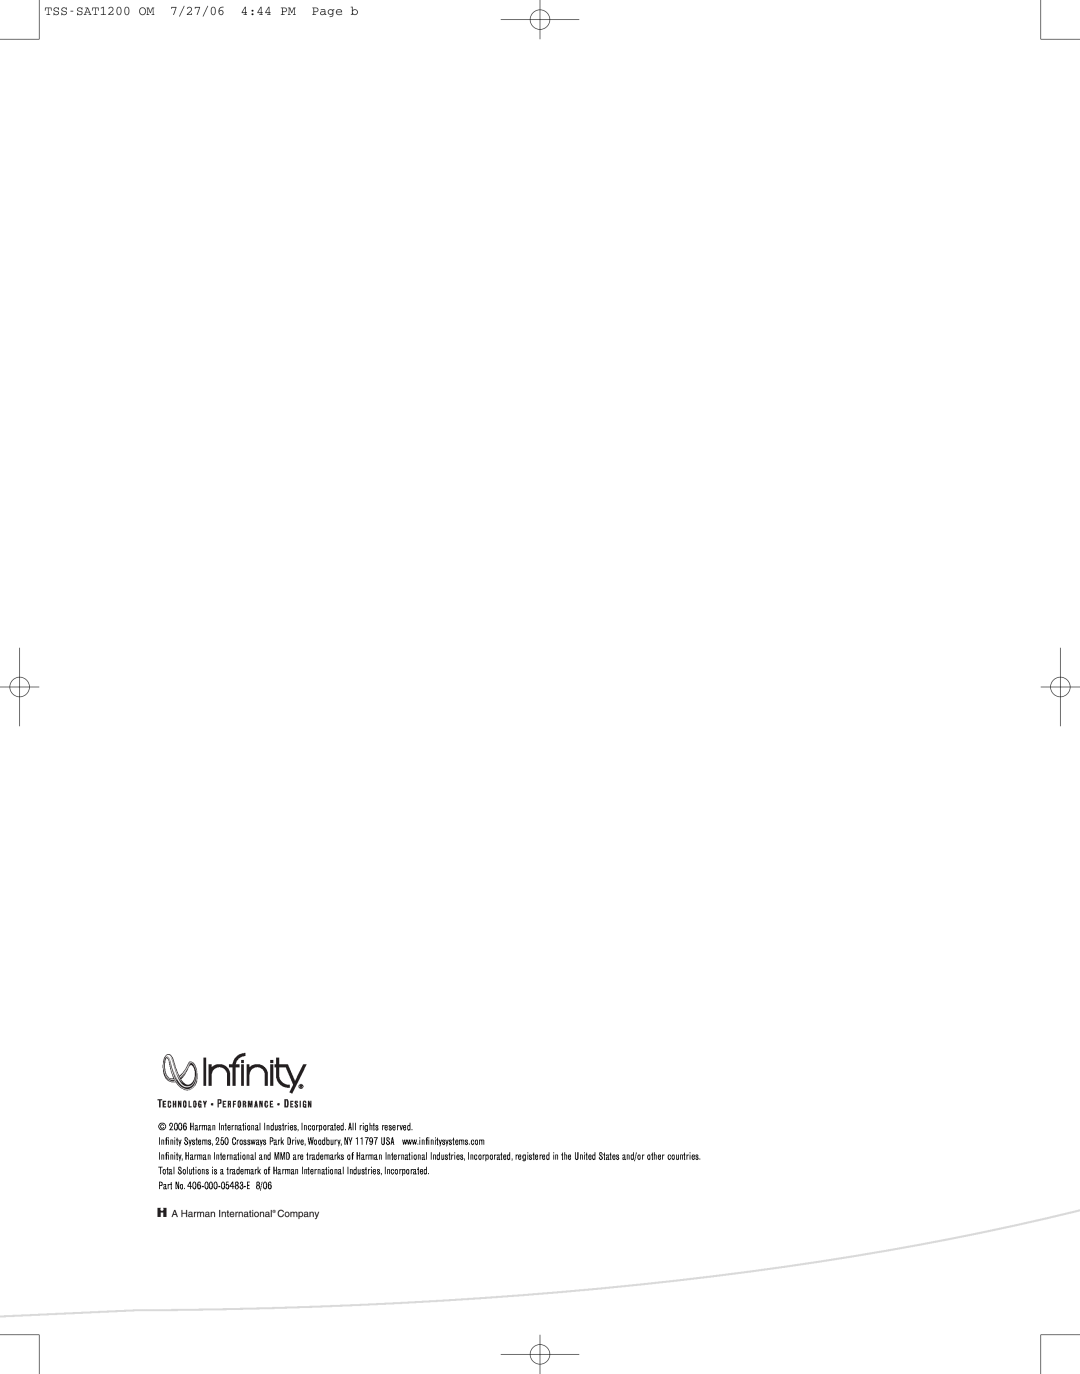 Infinity manual TSS-SAT1200OM 7/27/06 4 44 PM Page b 